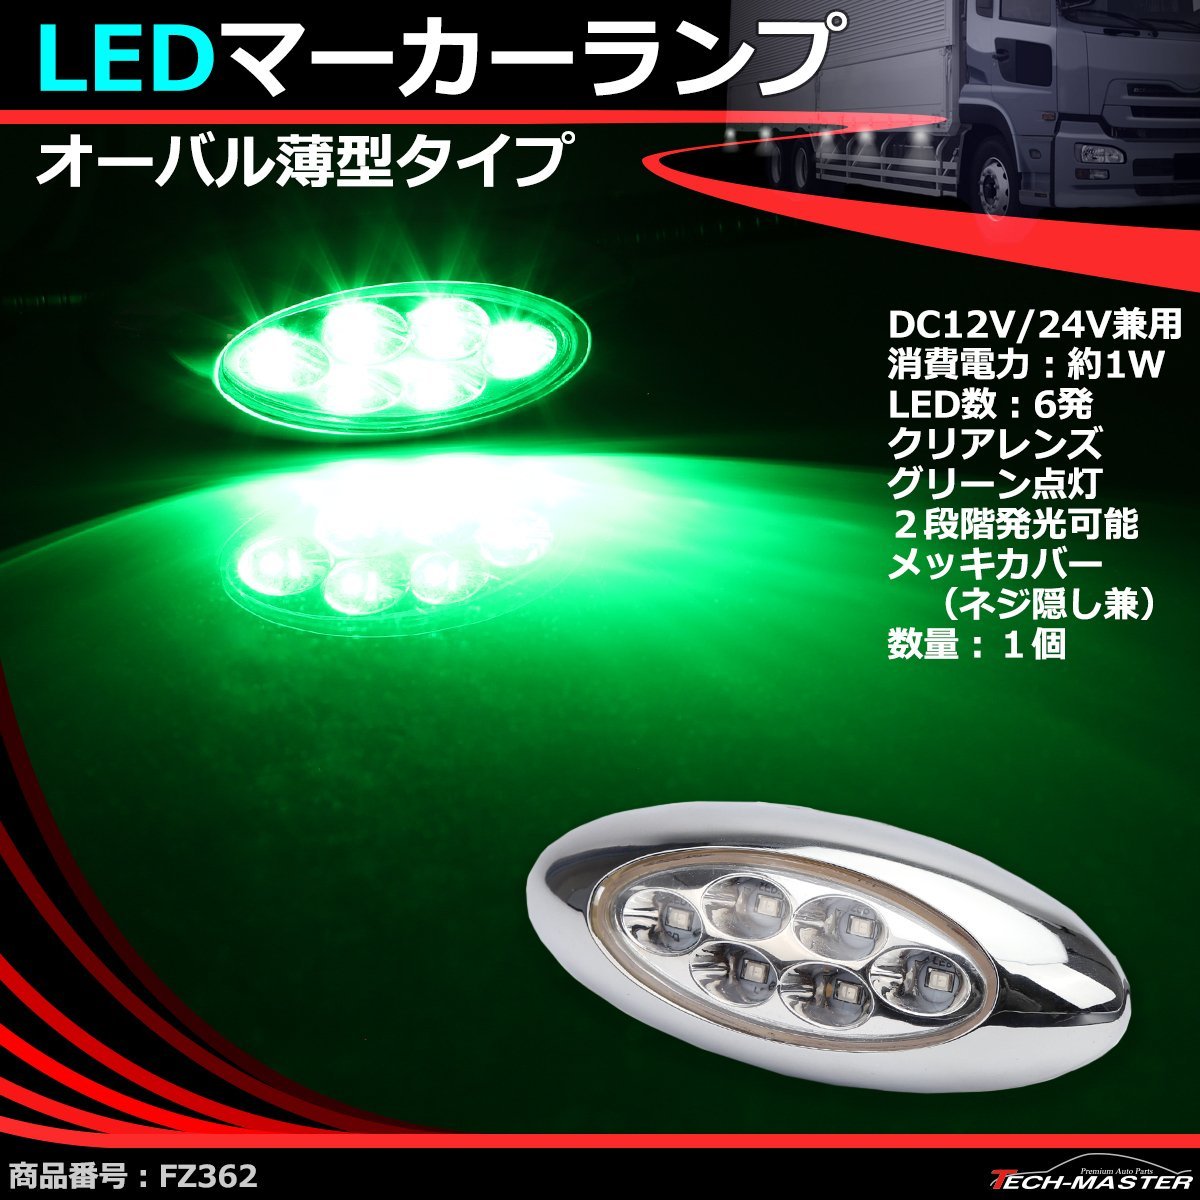 LEDマーカーランプ オーバル形状 DC12V/24V兼用 2段階点灯 汎用 LED6発 クリアーレンズ グリーン点灯 トラック サイドマーカー FZ362の画像1